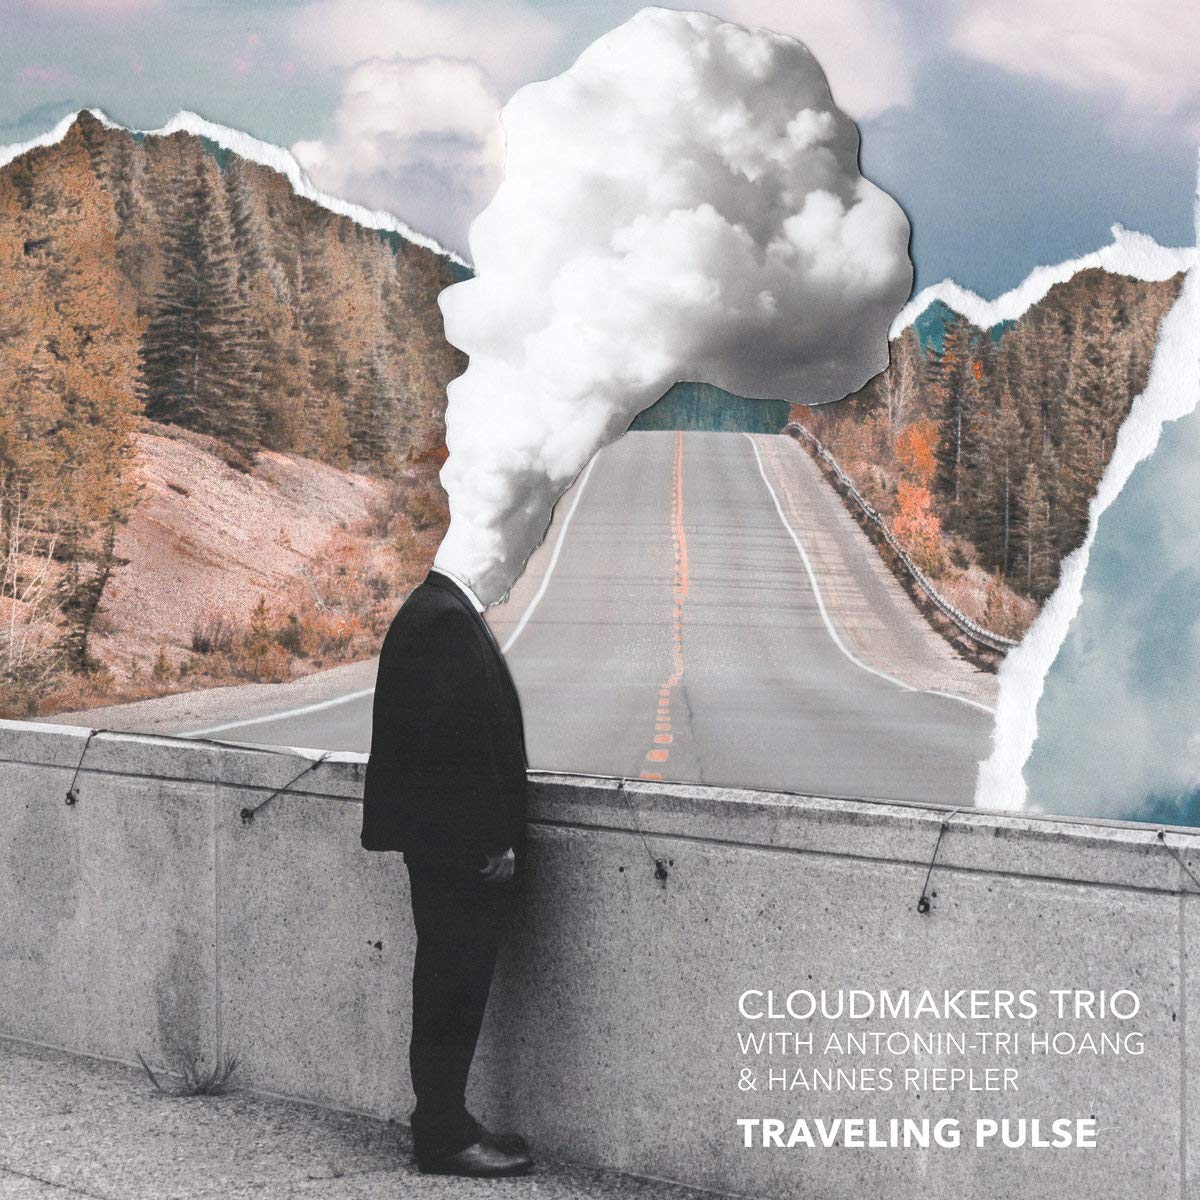 Cloudmakers Trio - Traveling Pulse vinyl cover